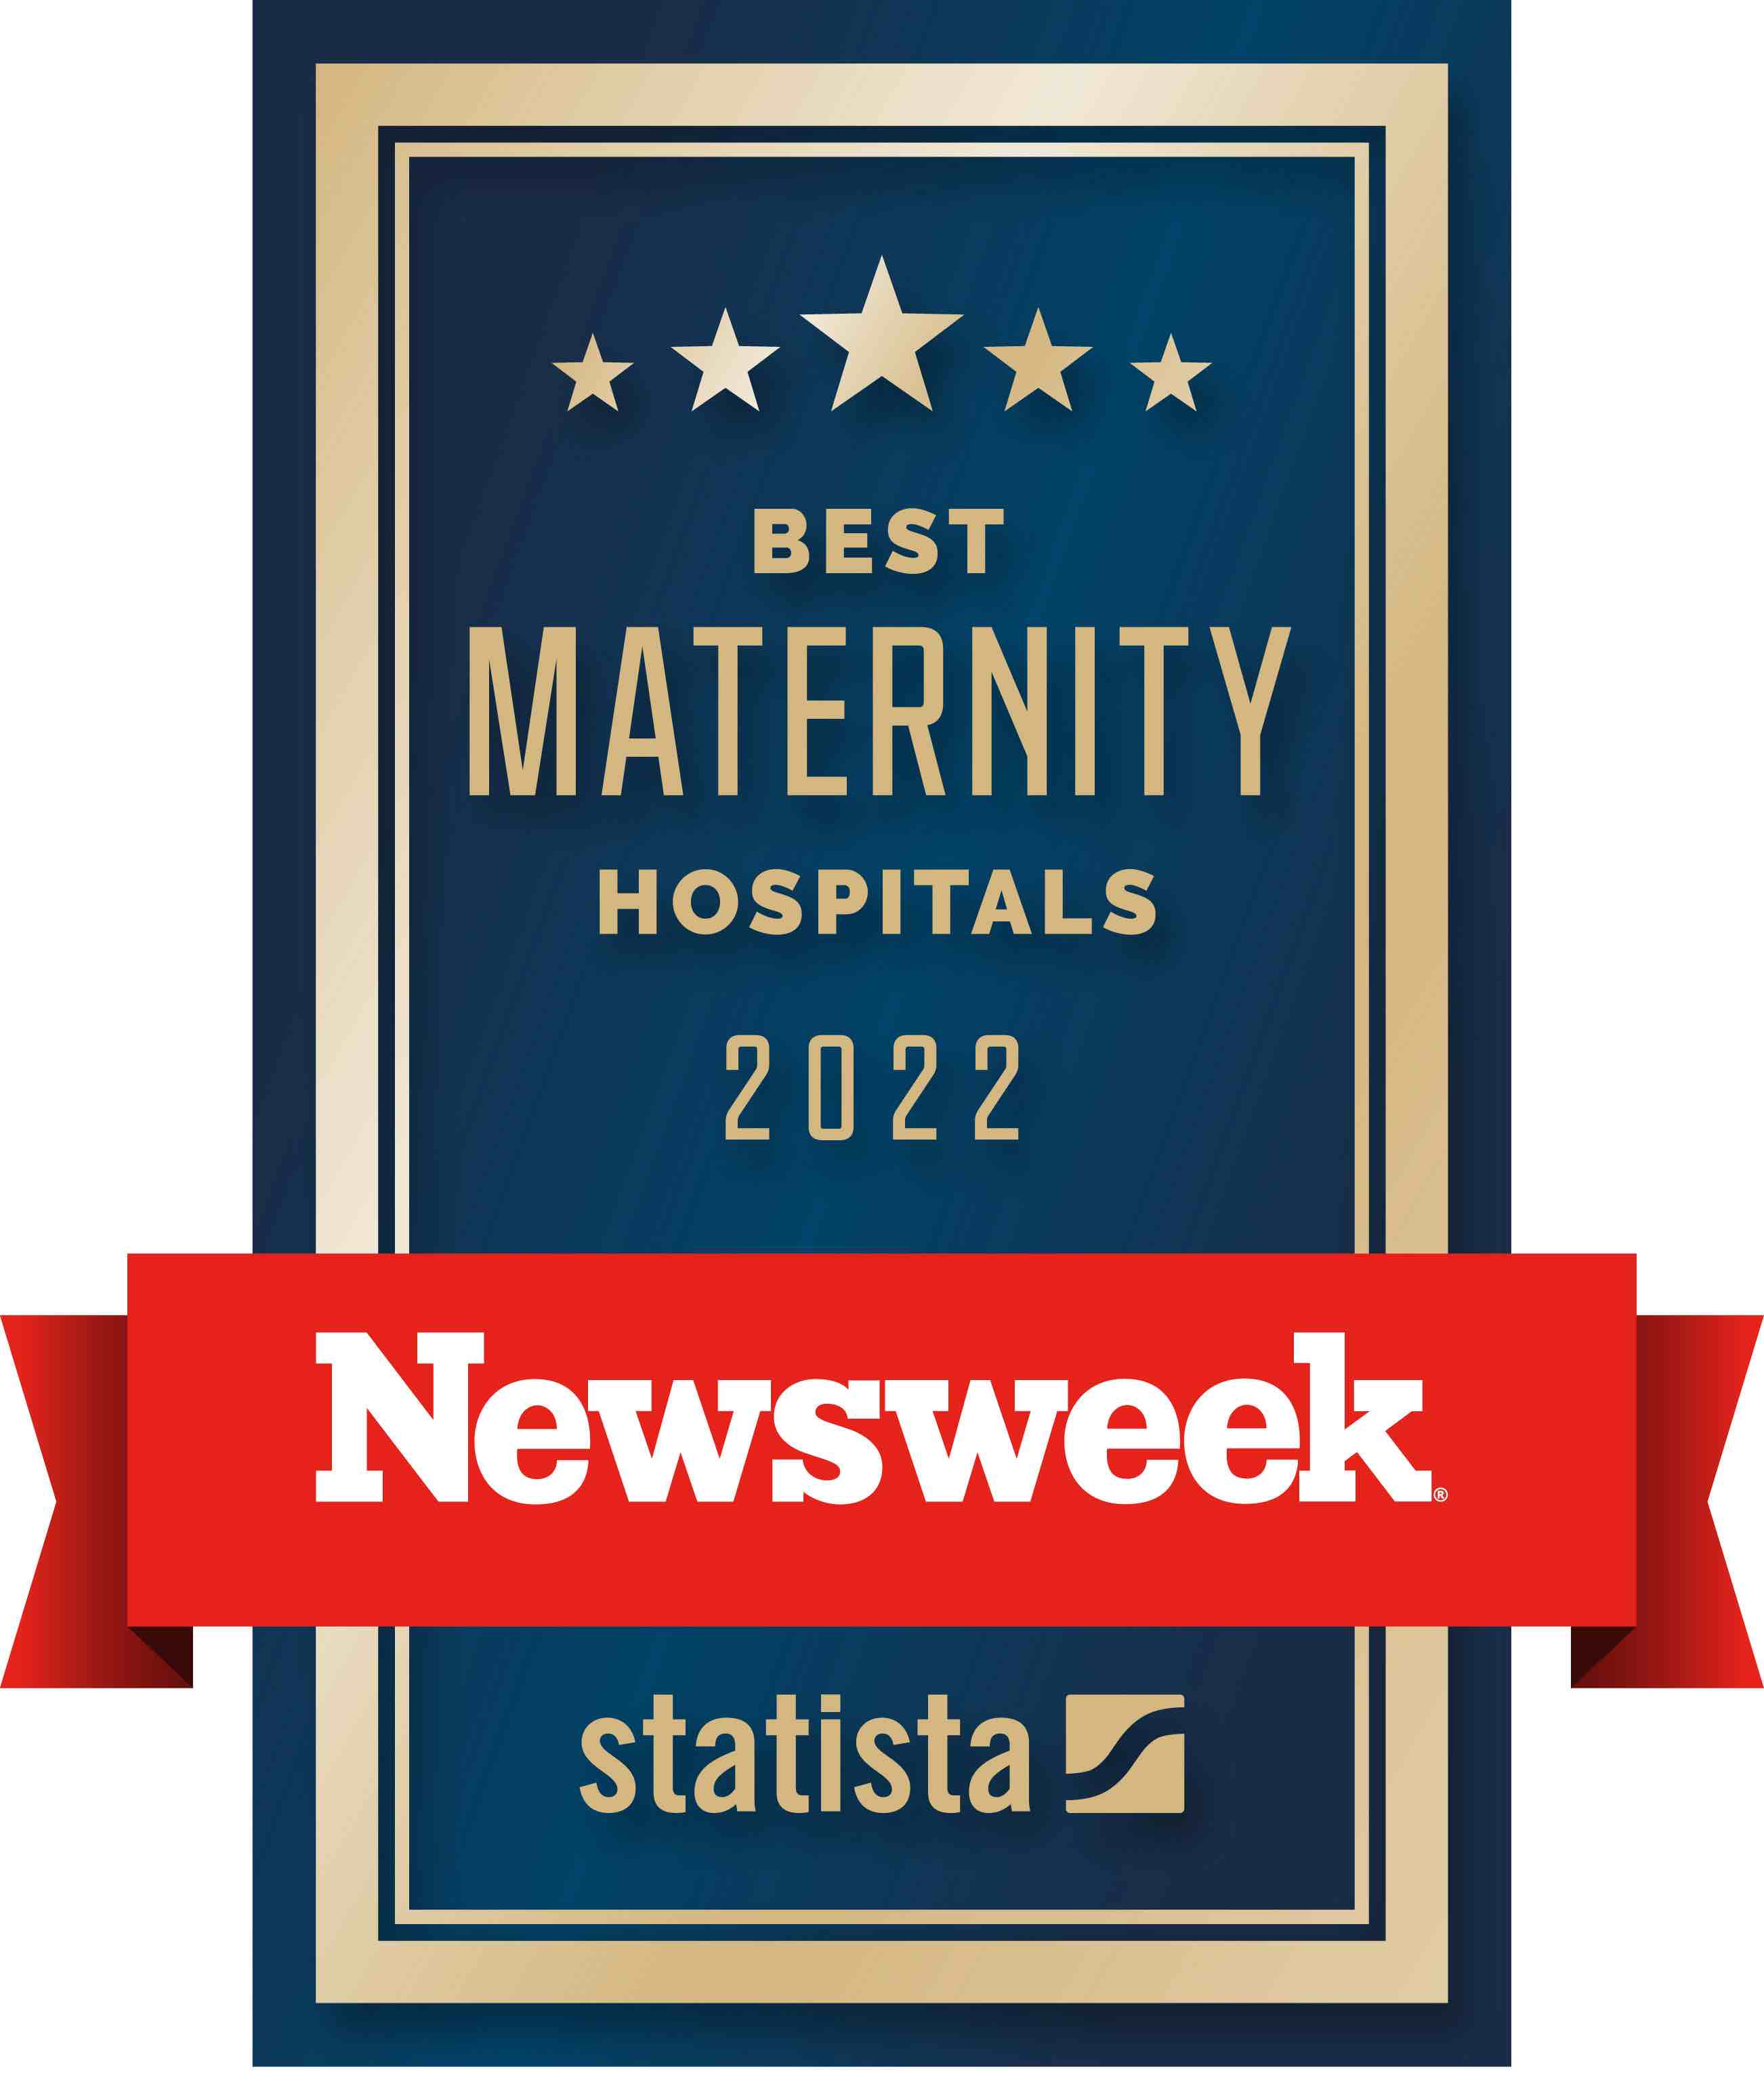 Newsweek’s Best Maternity Hospitals